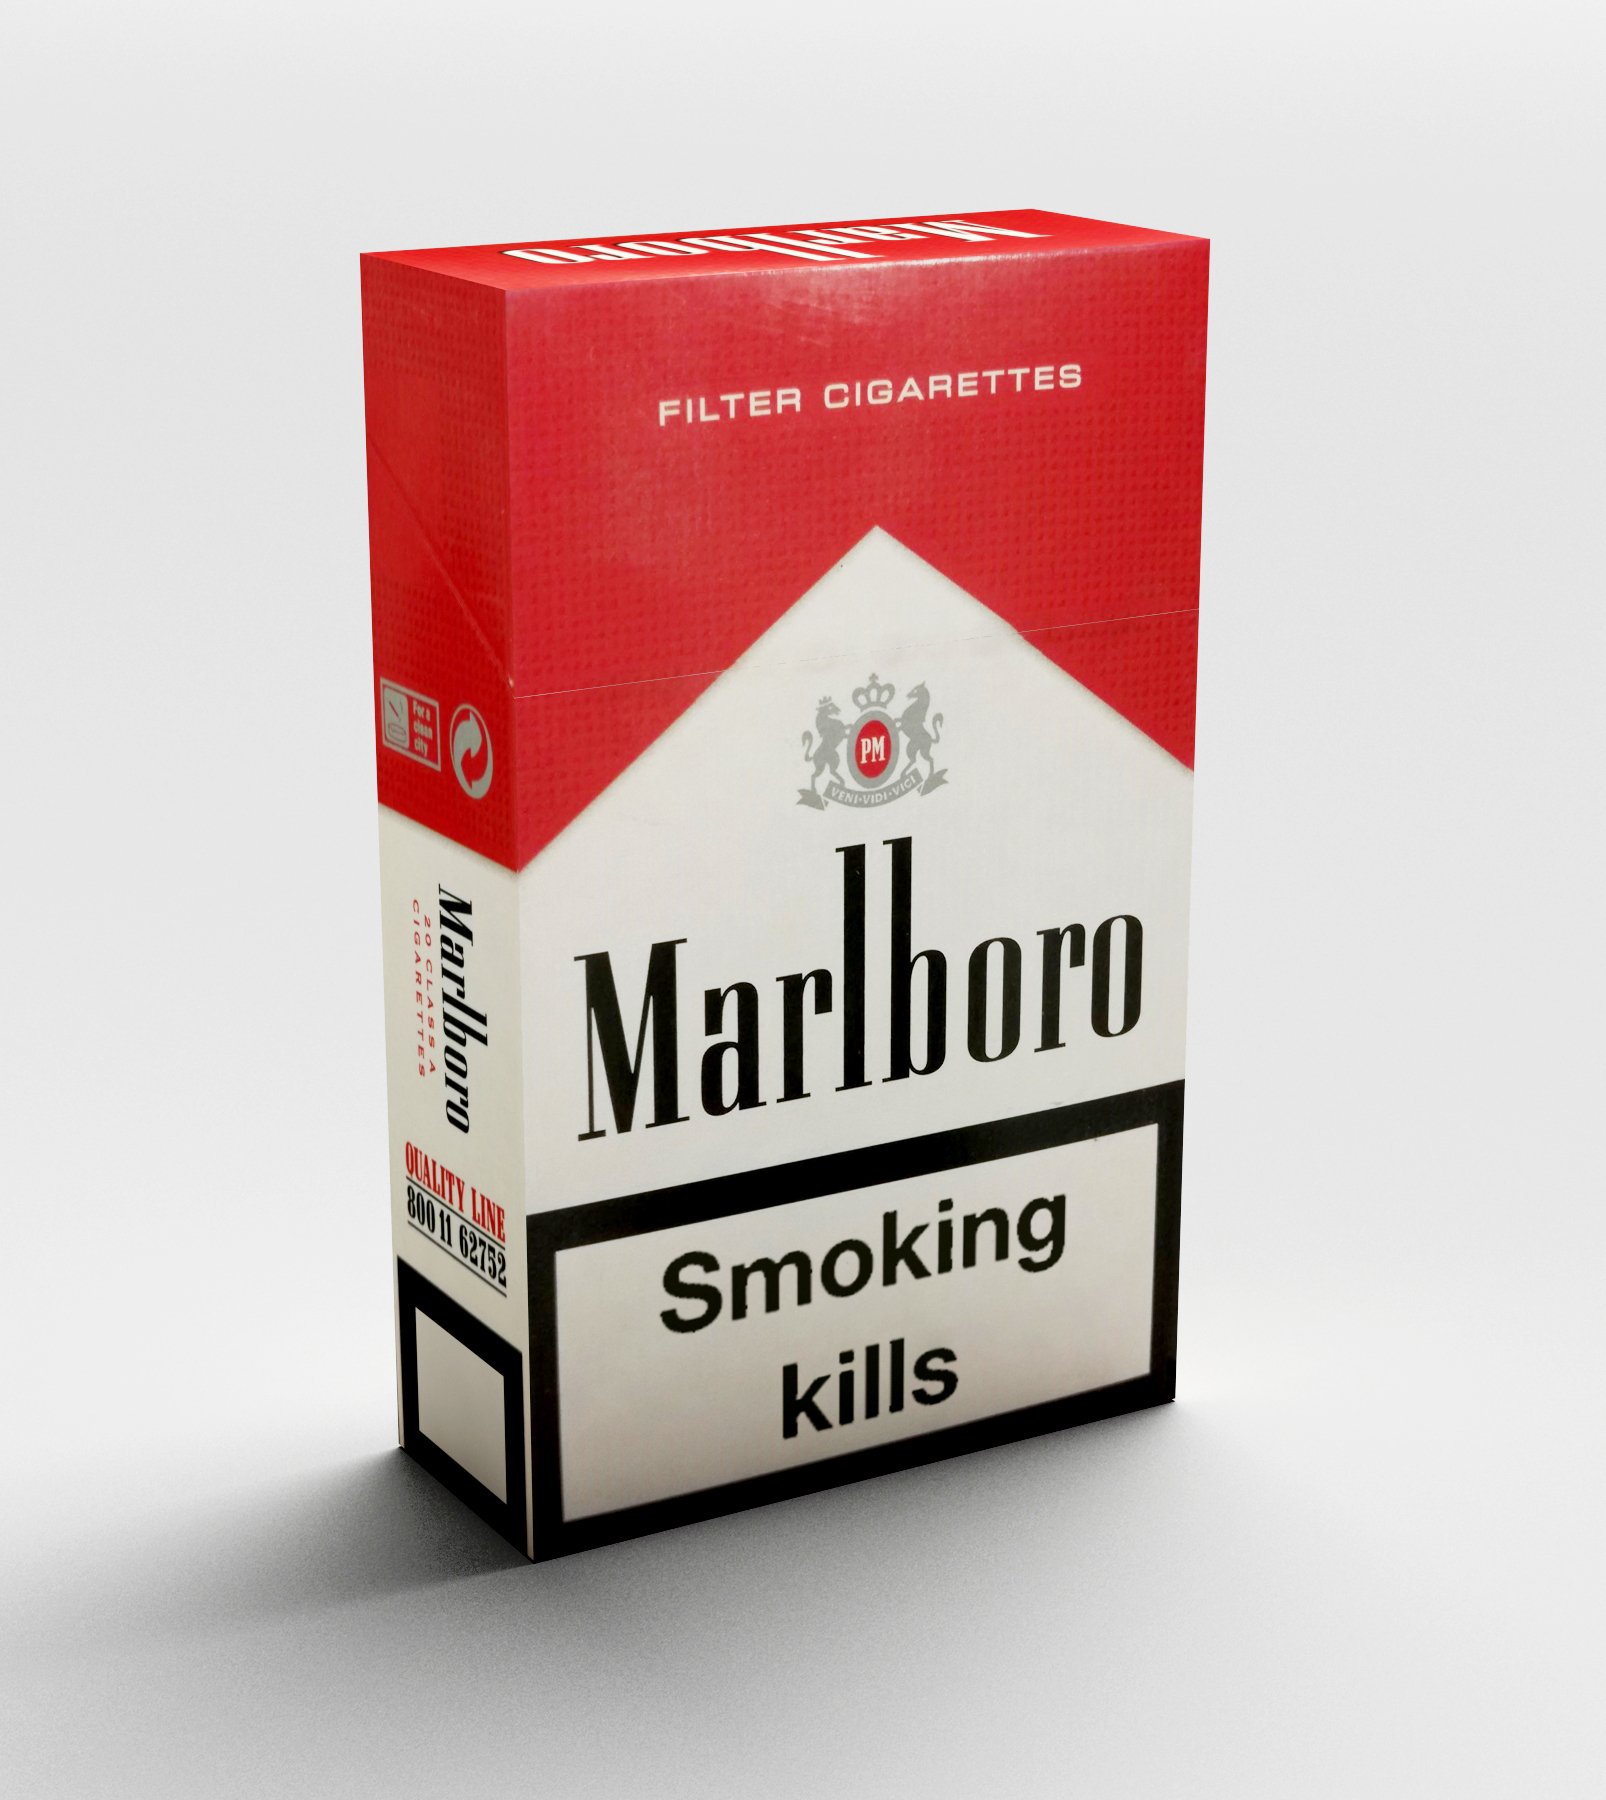 Мальбора. Сигареты Marlboro. Пачка сигарет Мальборо. Marlboro марки сигарет. Сигареты Мальборо 2021.